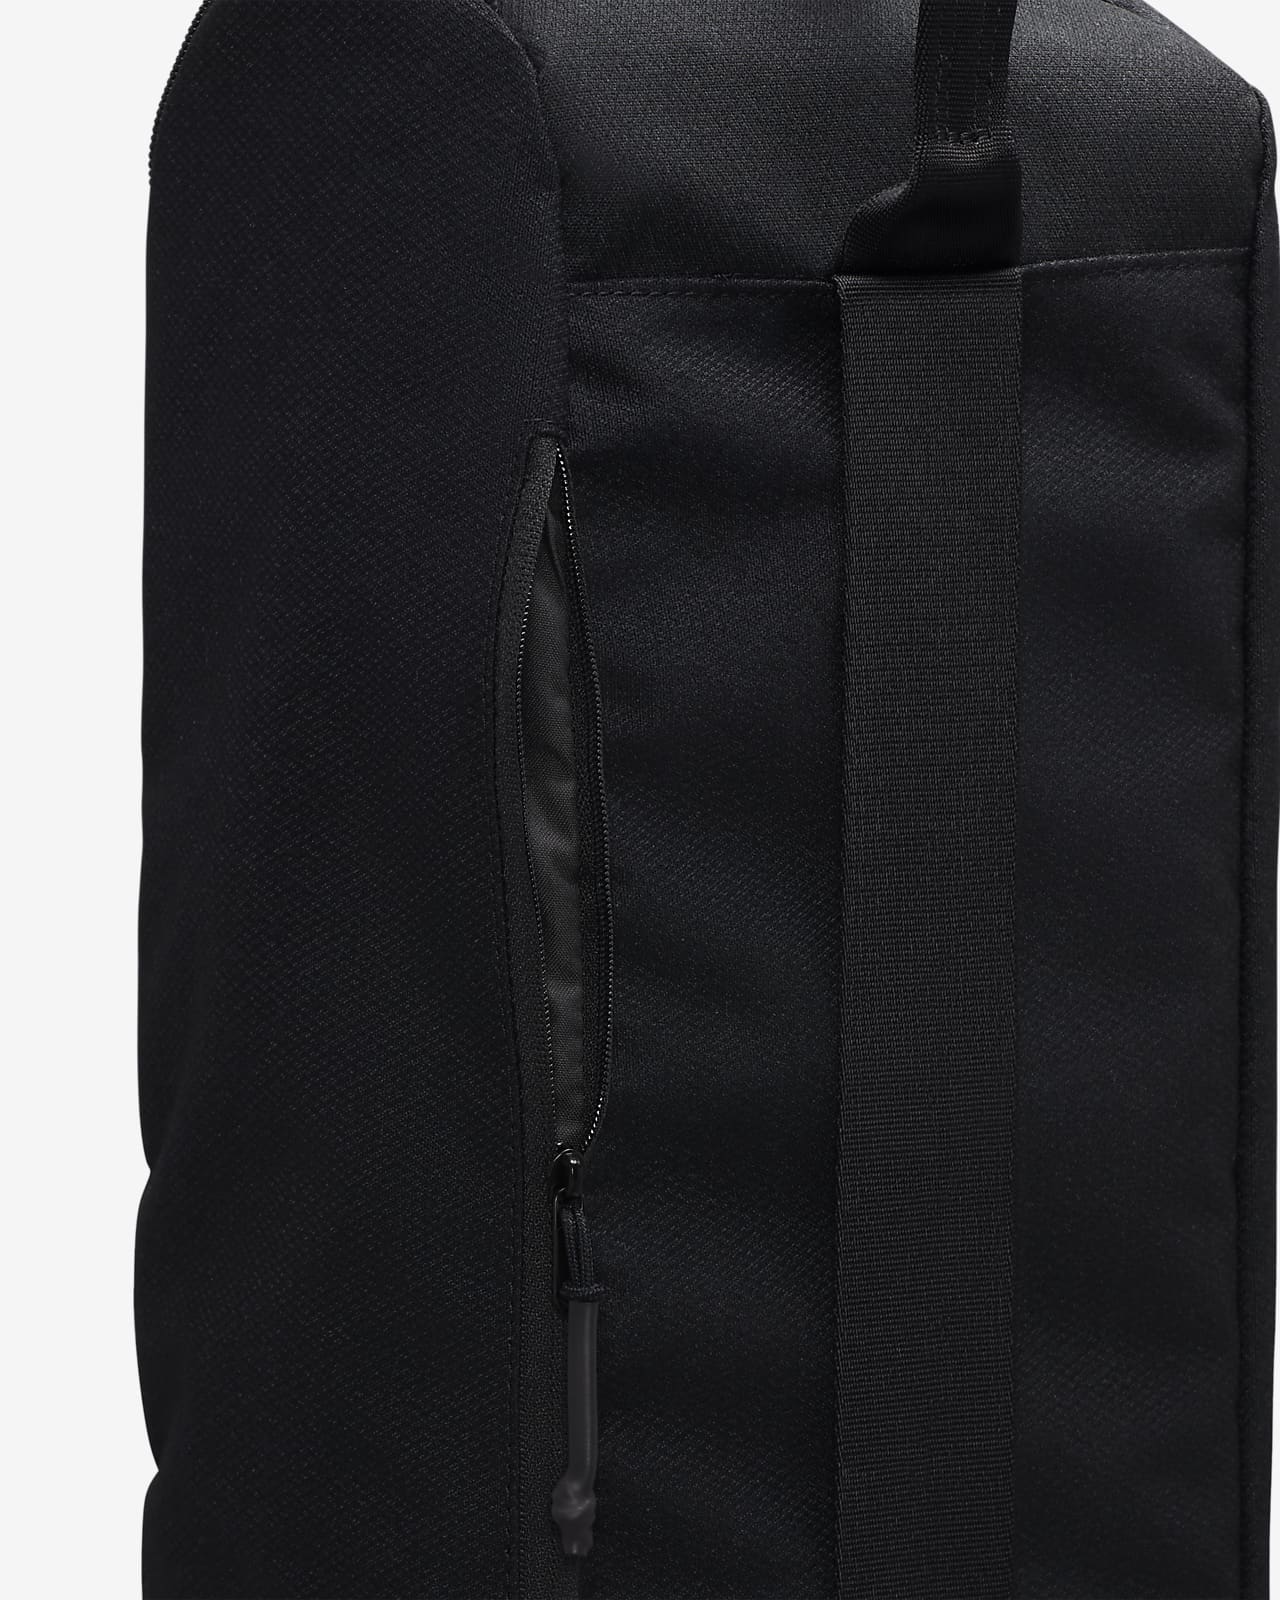 Black Large Yoga Mat Bag Duffel Bag Yoga Mat Tote Carrier With Cup